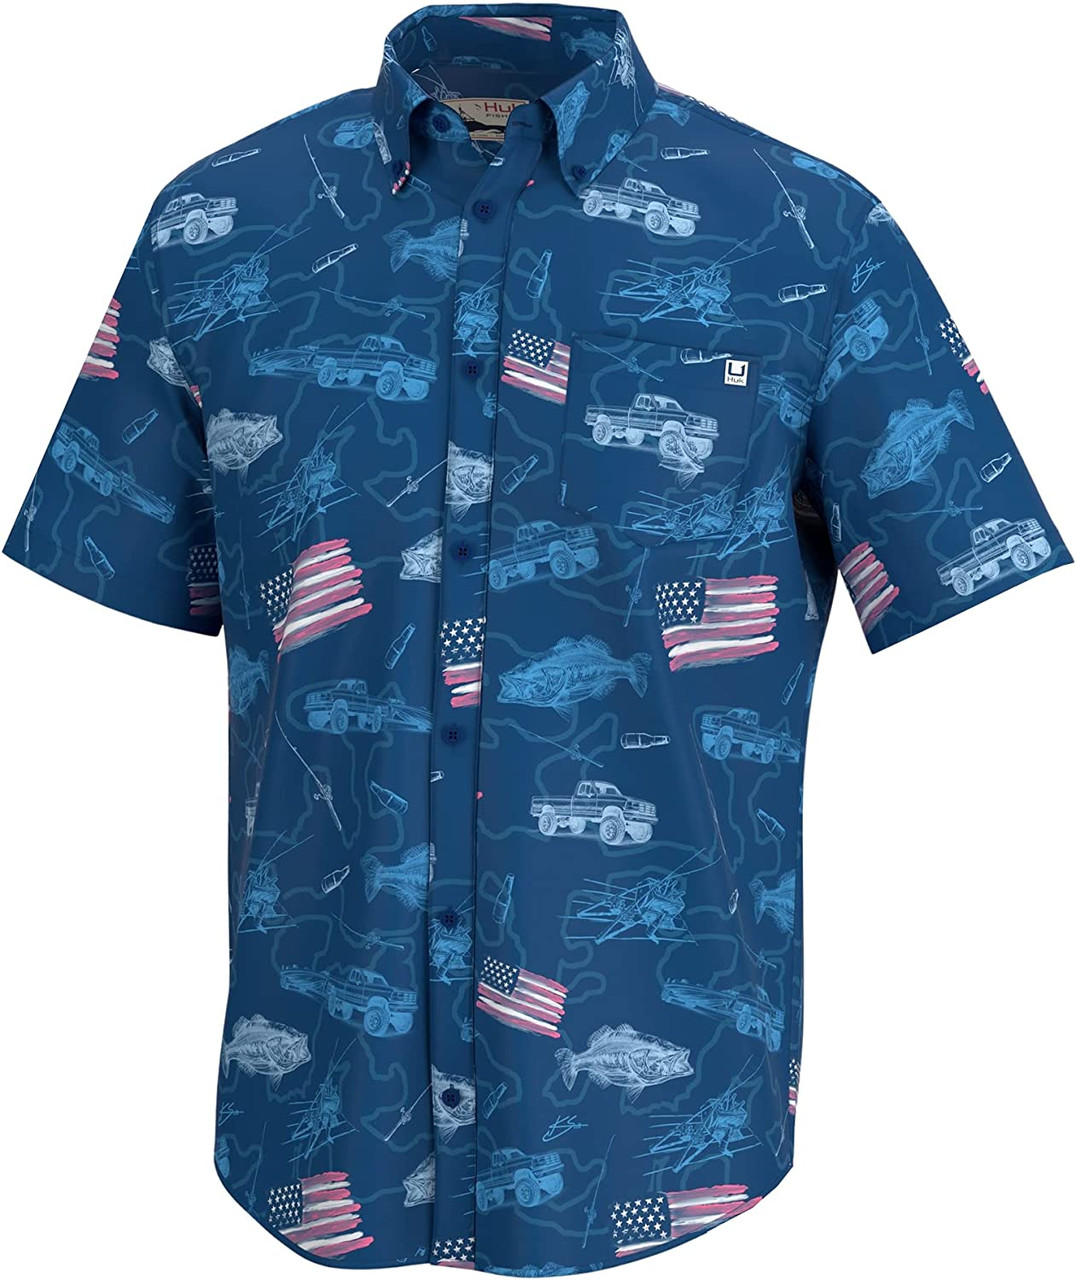 Huk Men's Kona Fish and Flags Button-Down Shirt - Set Sail - M